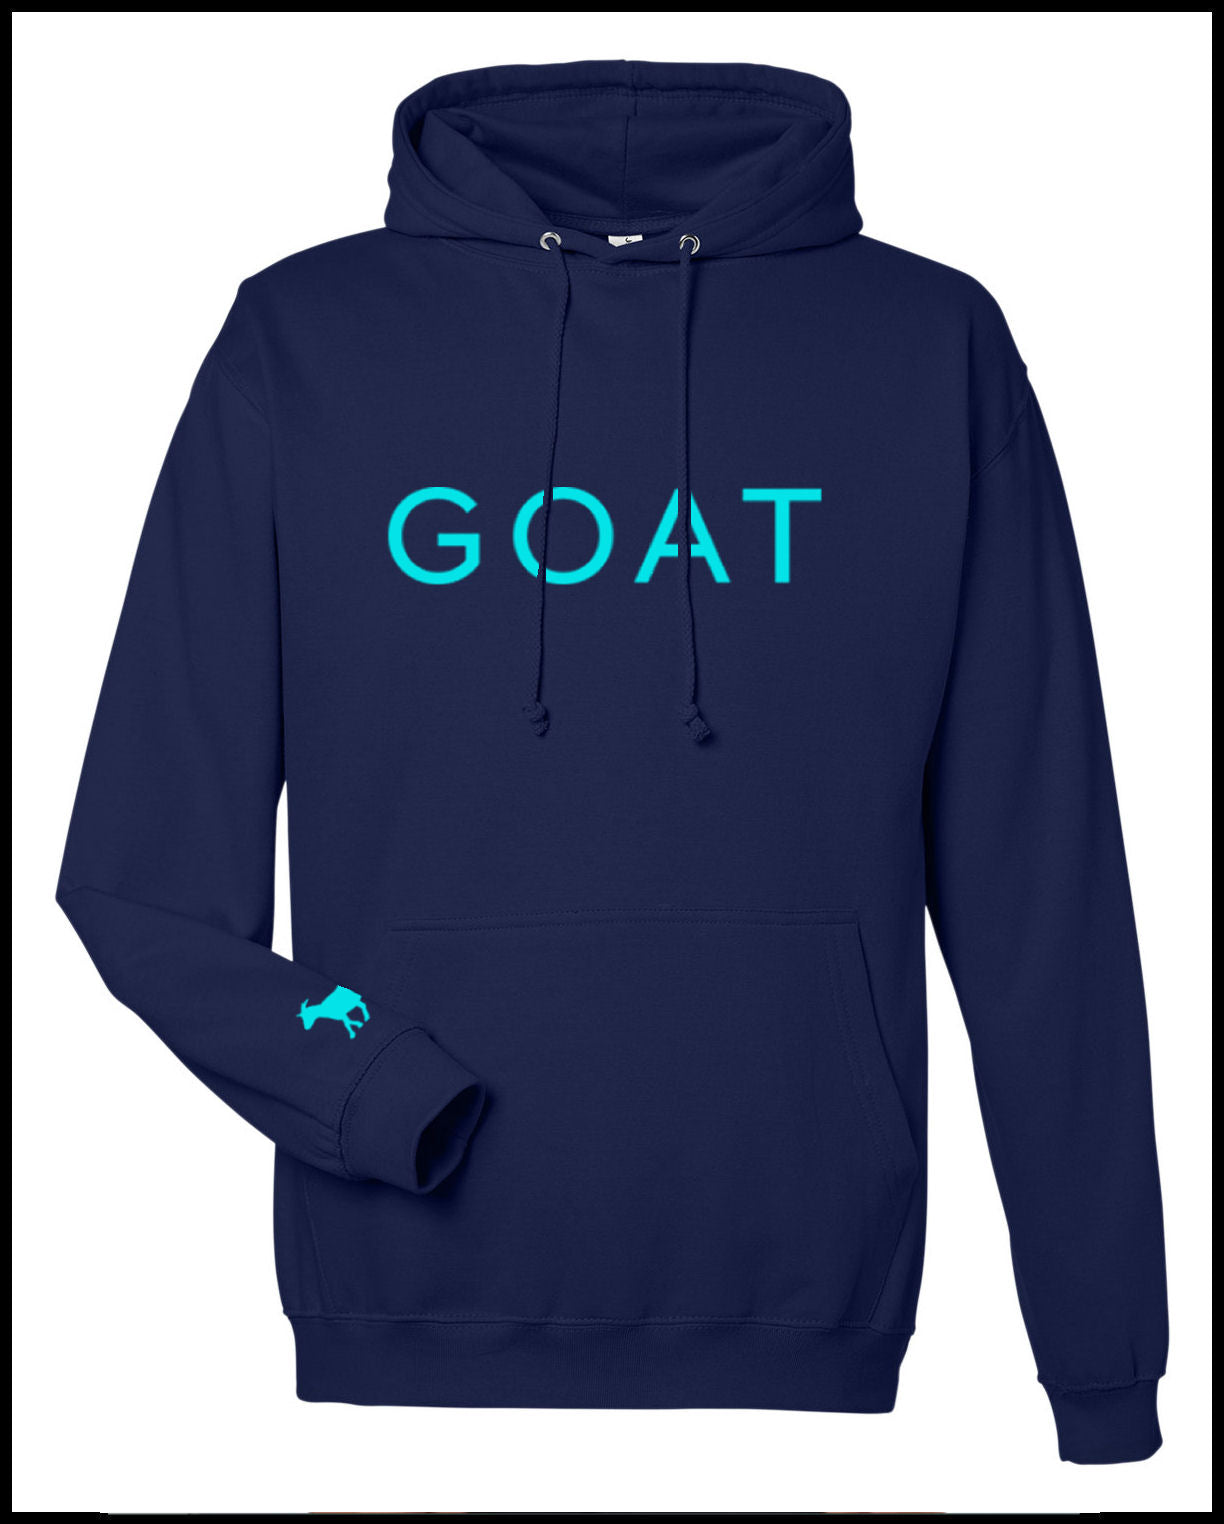 Goat Navy Hooded Sweatshirt